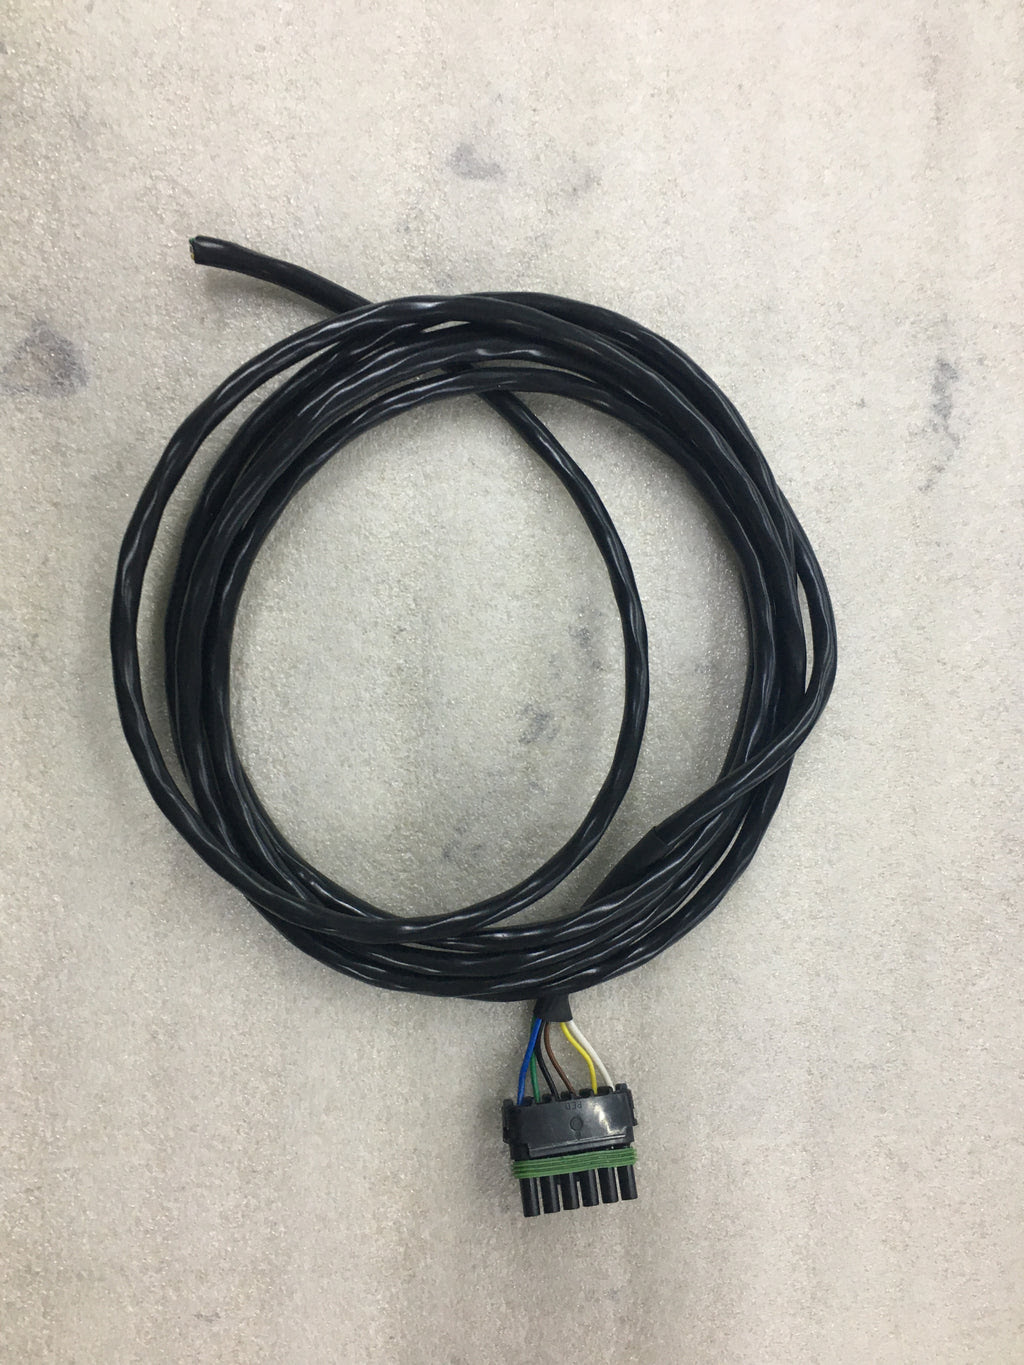 Trailer wiring harness, main type, 72 in. Wiring Harness Trailer 13 Bushtec